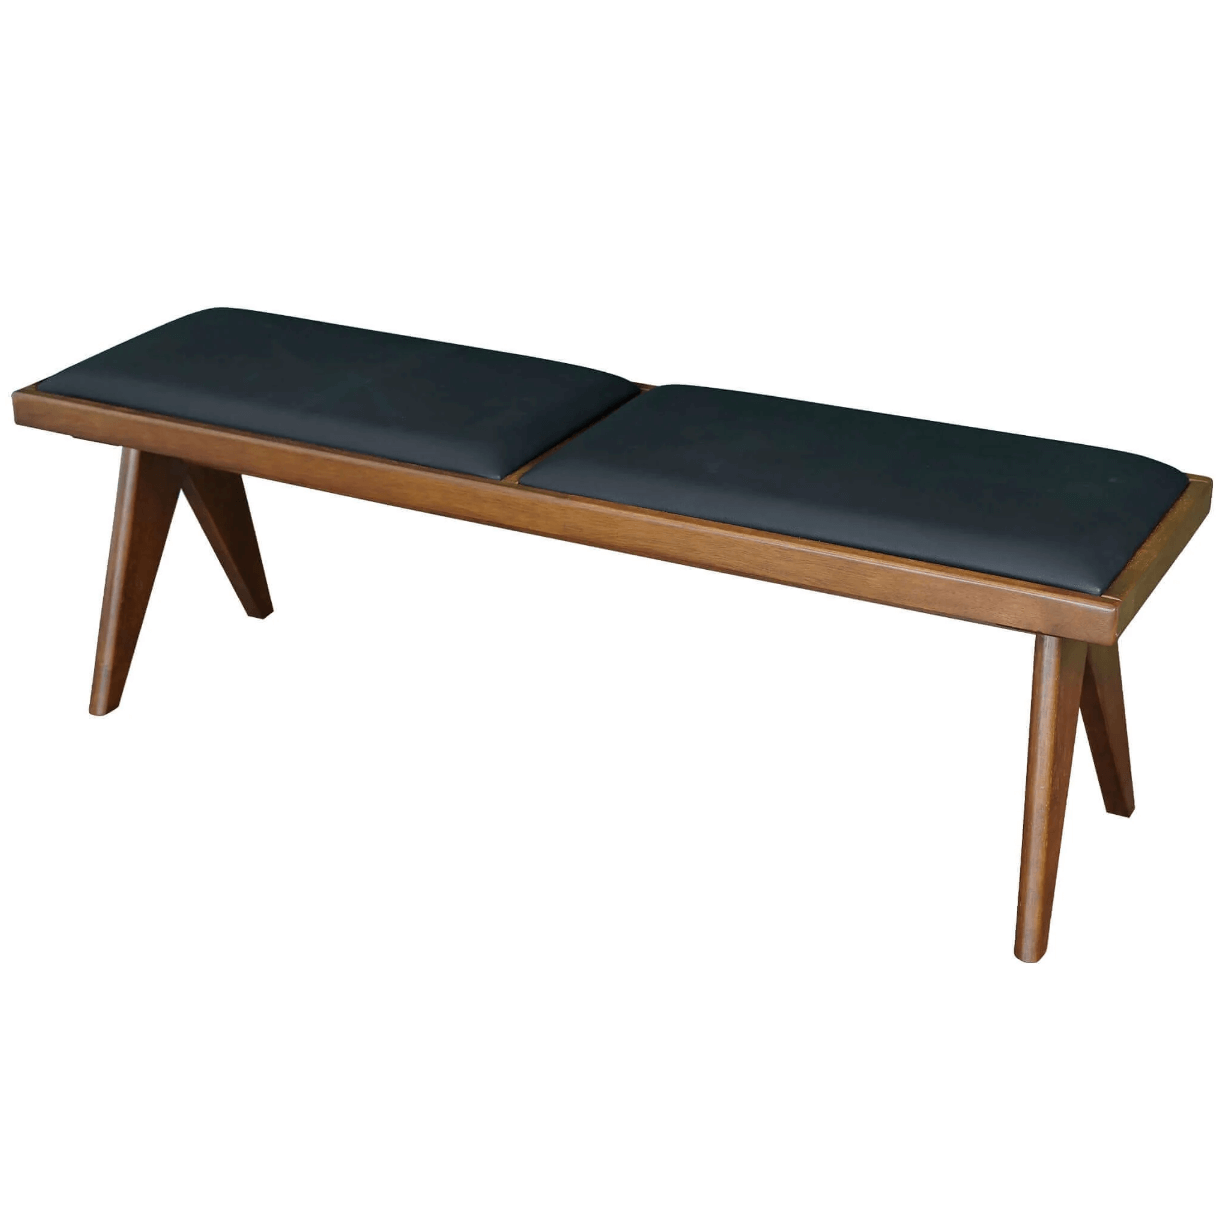 Keira MCM Solid Wood Bench Black Vegan Leather Upholstered Top 51" - Revel Sofa 